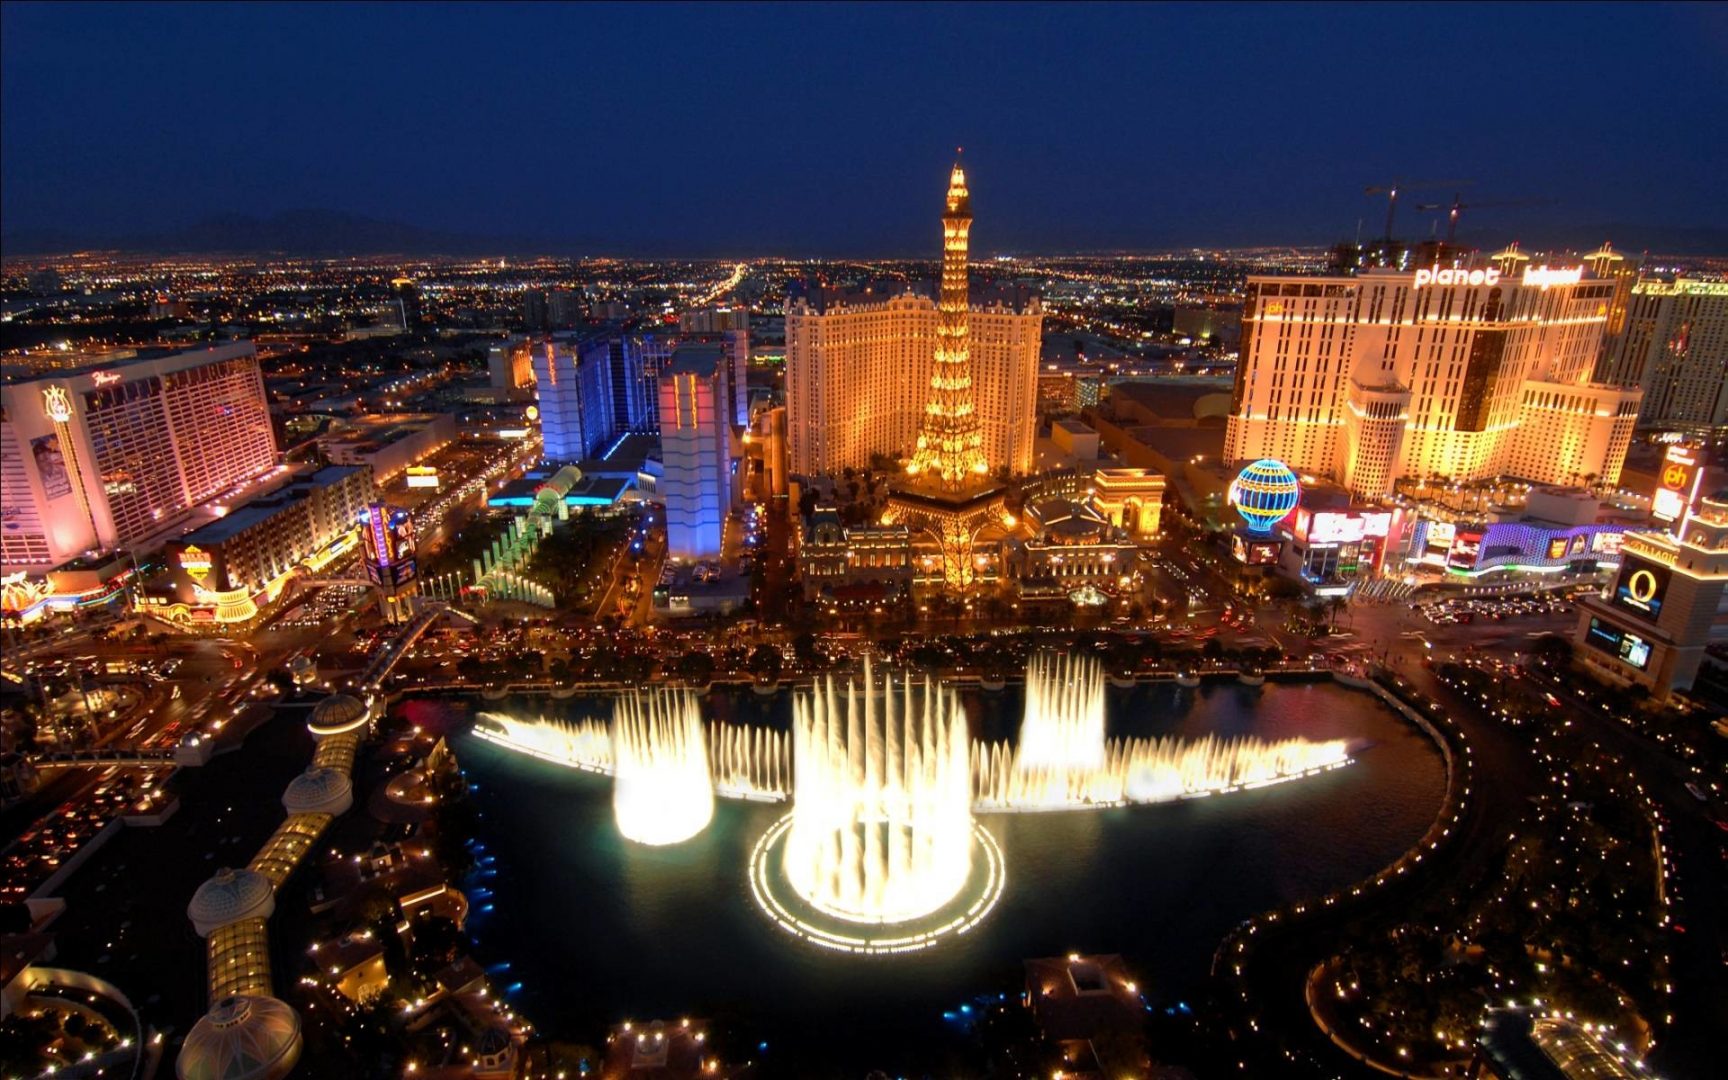 Las Vegas | City Header Image